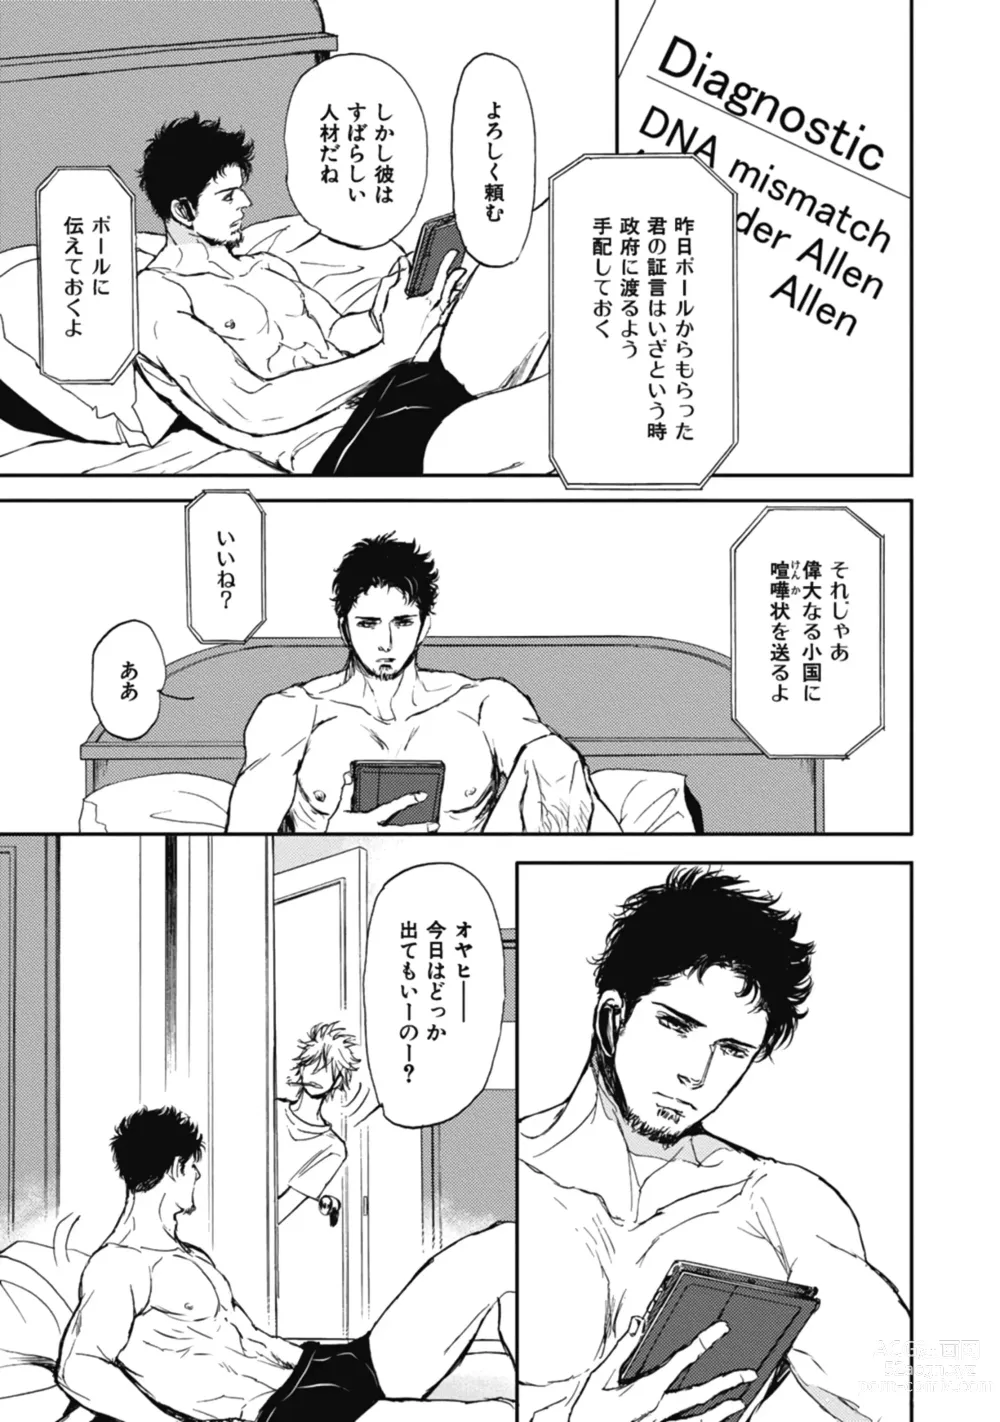 Page 11 of manga Papas Assassin. ~Futari Shite Tonde Yuku.~